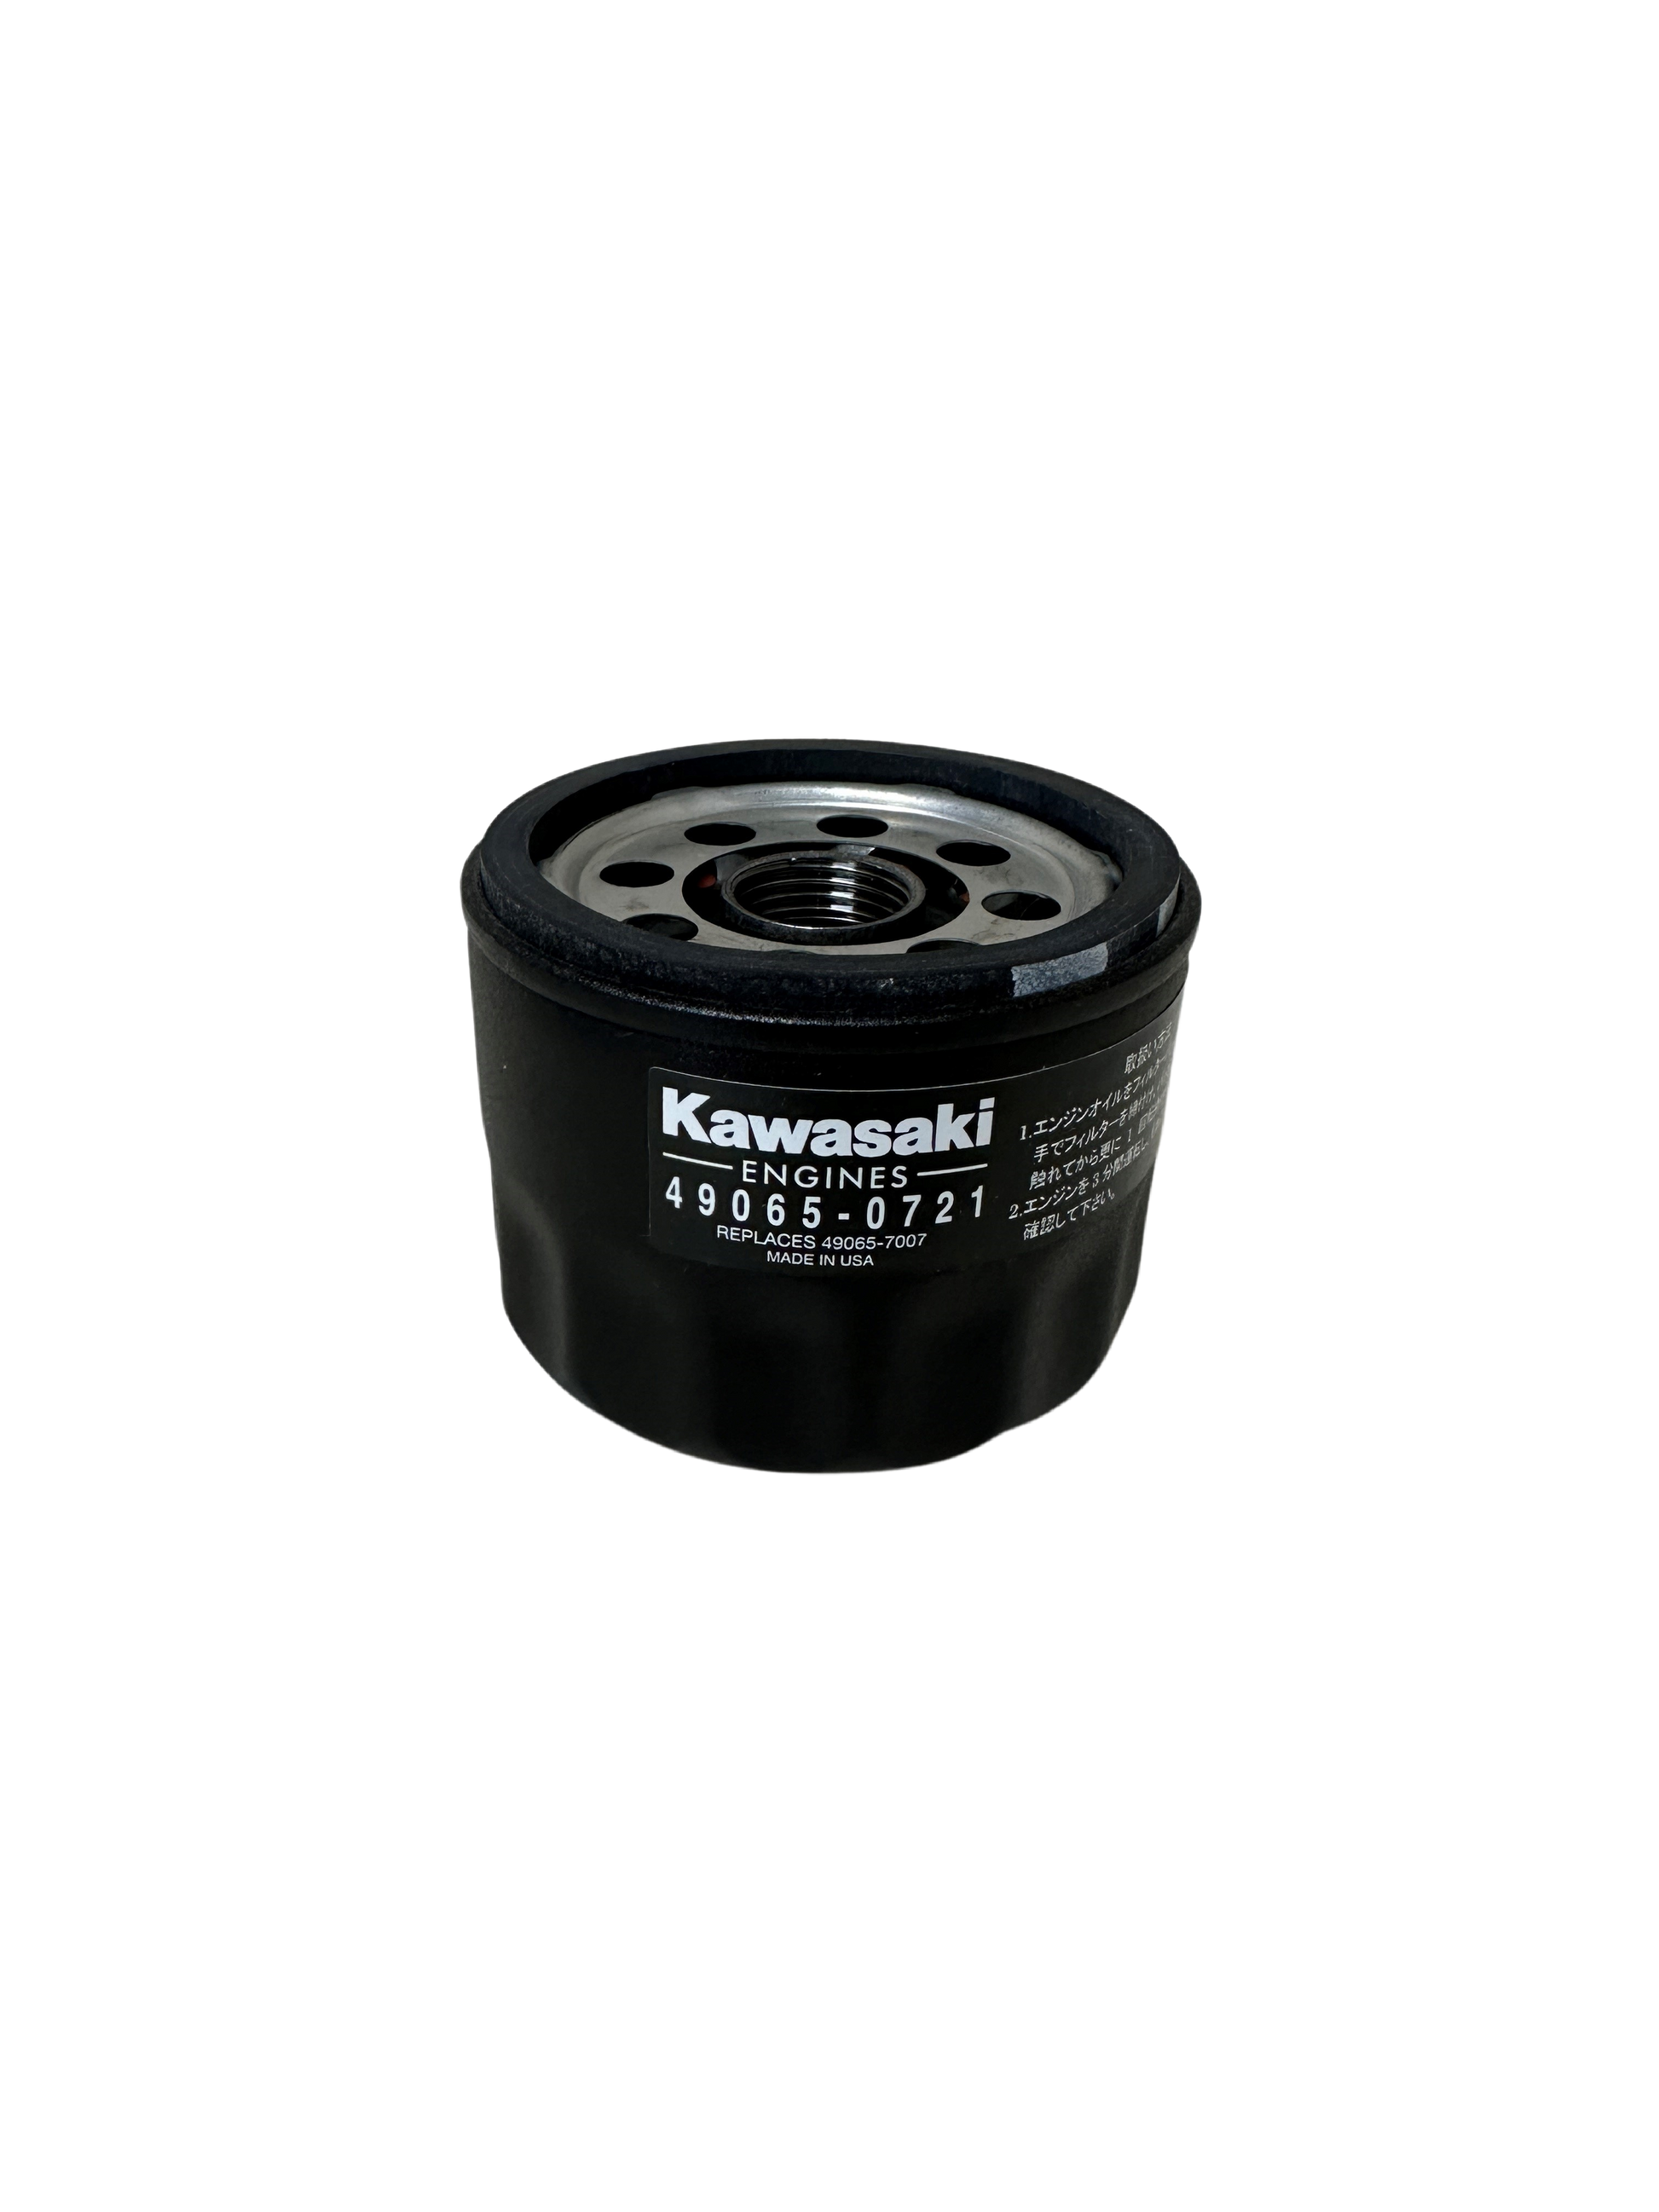 Kawasaki Original Equipment Kawasaki Oil Filter for Kawasaki FR and FS  Series Engines OE# 49065-0721, 49065-7007 490-201-M007 - The Home Depot